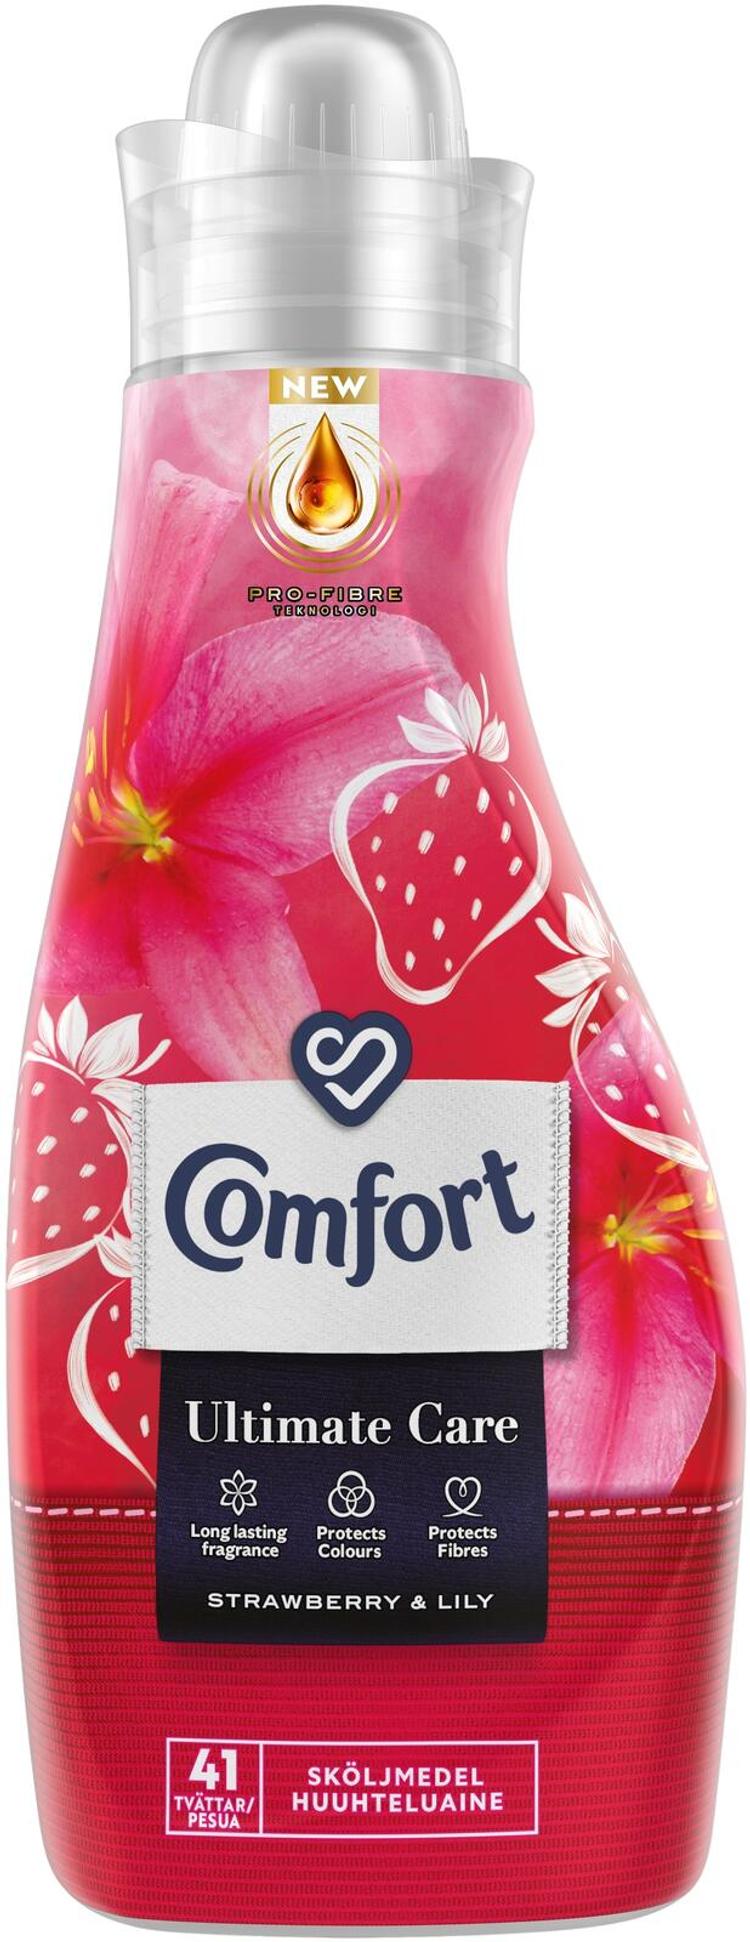 Comfort Revive Huuhteluaine Strawberry & Lily 750 ml 41 pesua